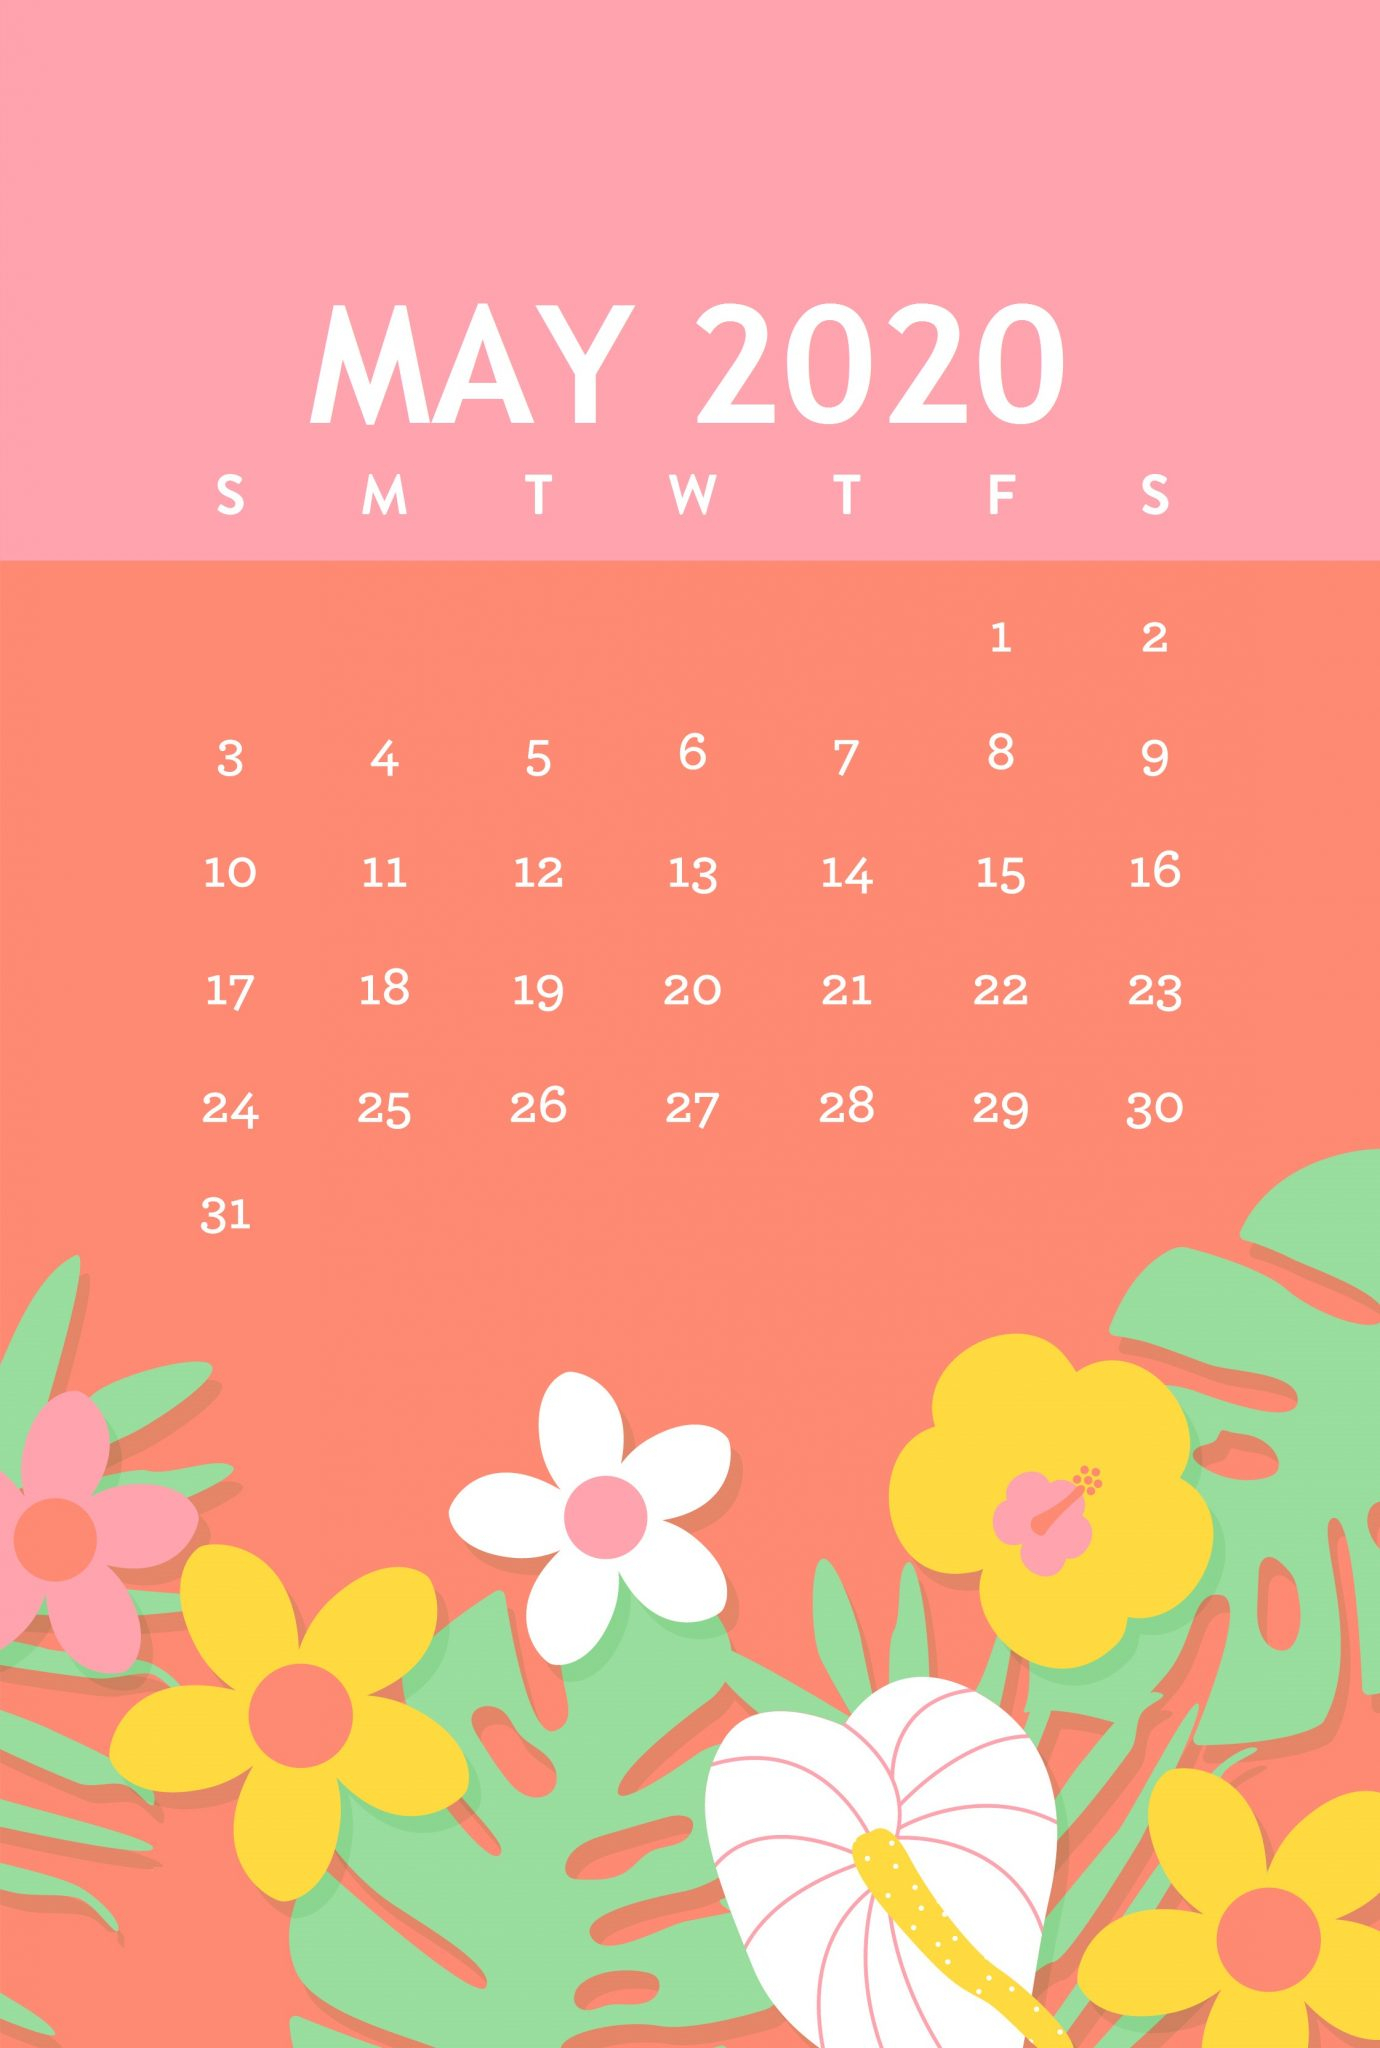 Iphone May 2020 Wallpaper | Calendar 2019